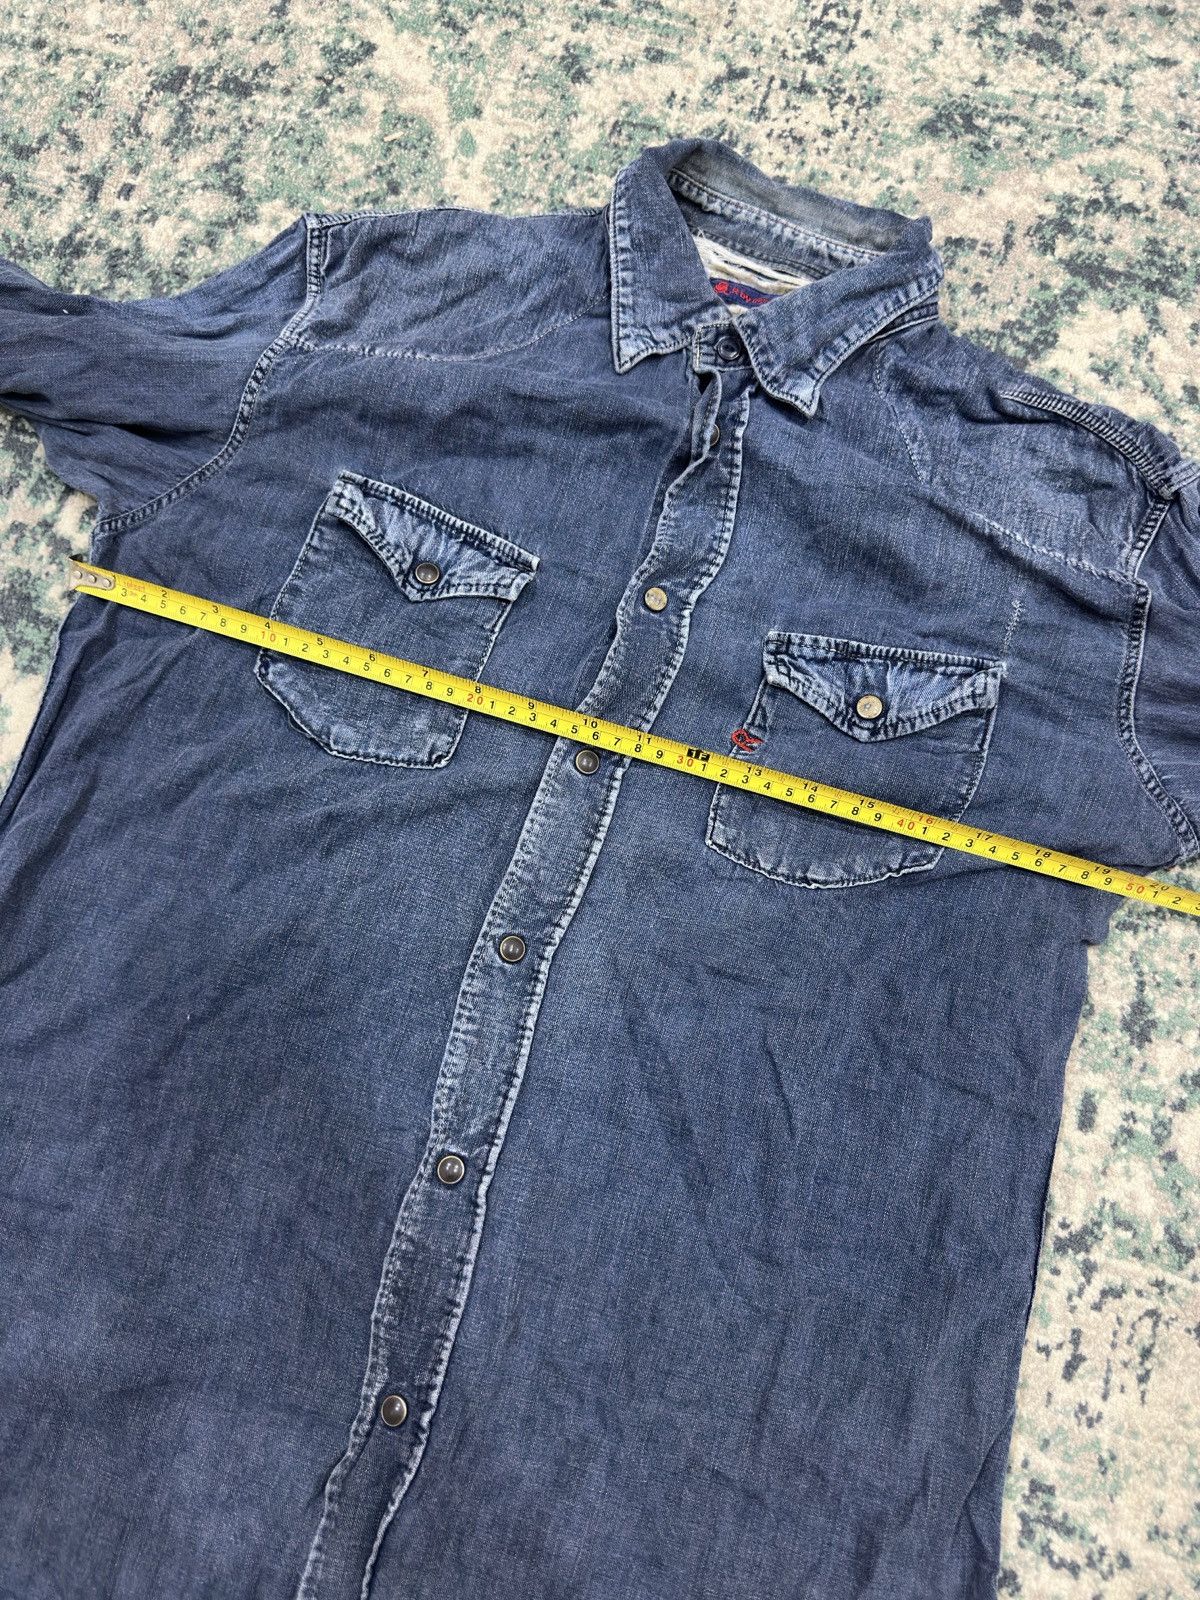 45rpm Japan Western Denim Wash Button Up Shirt - 9